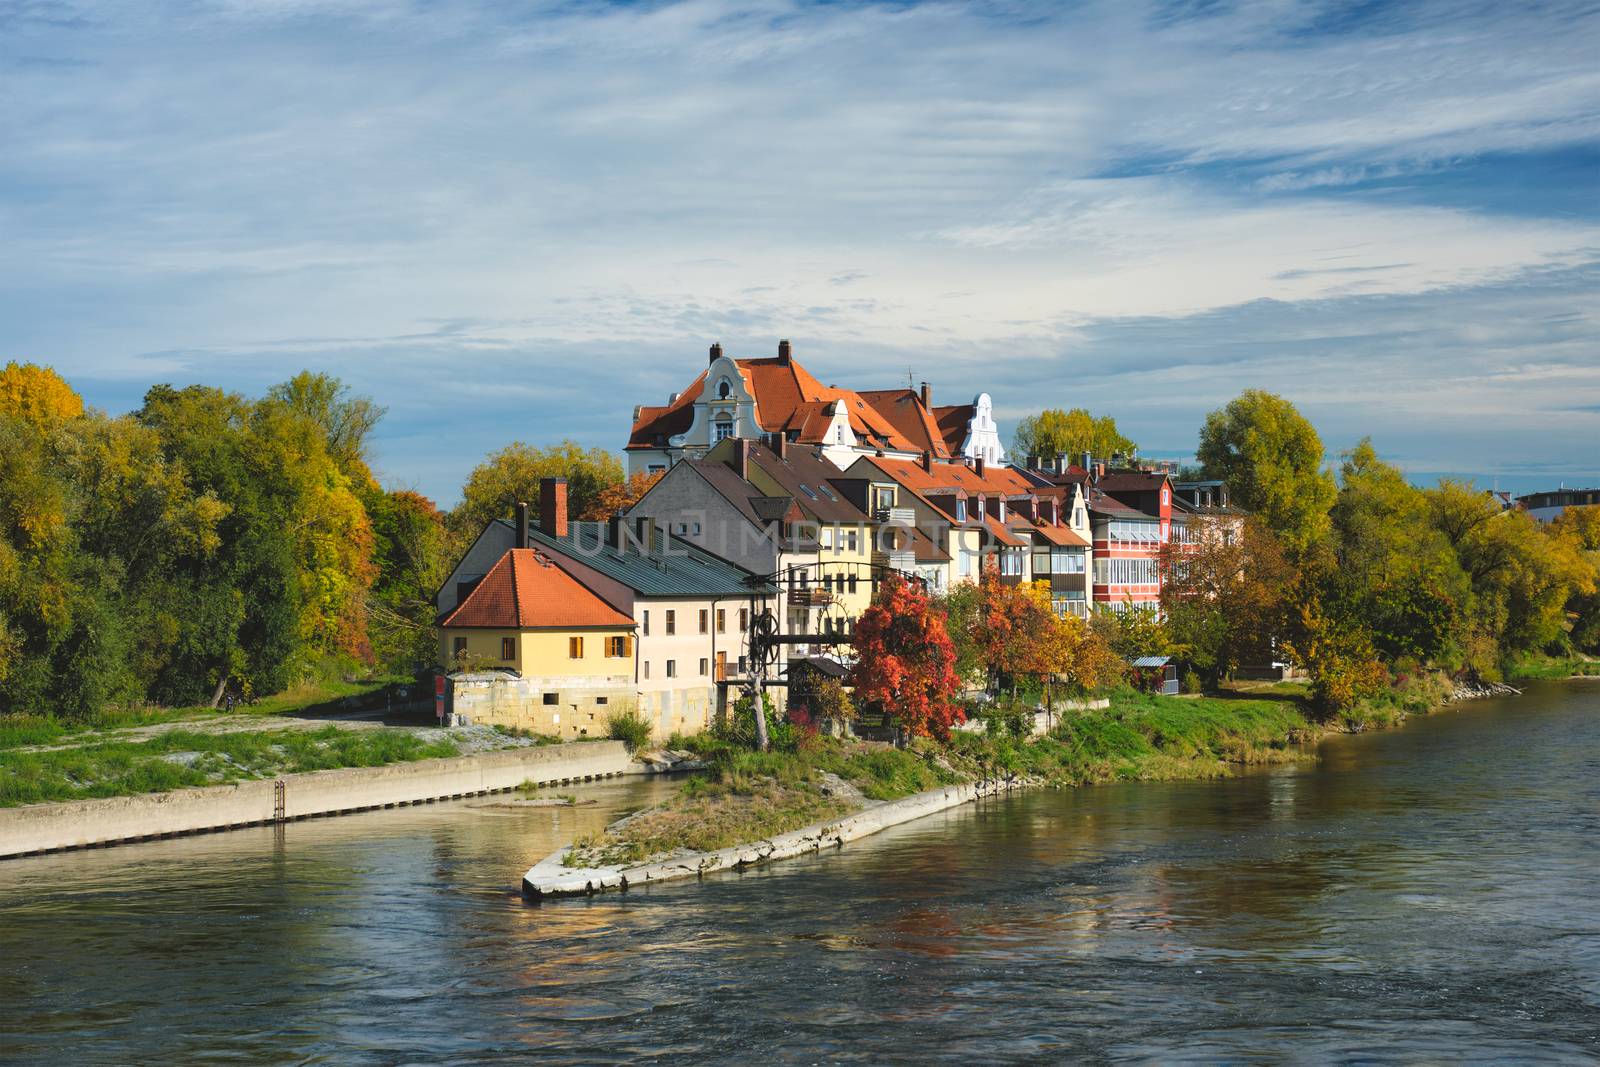 Houses along Danube River. Regensburg, Bavaria, Germany by dimol